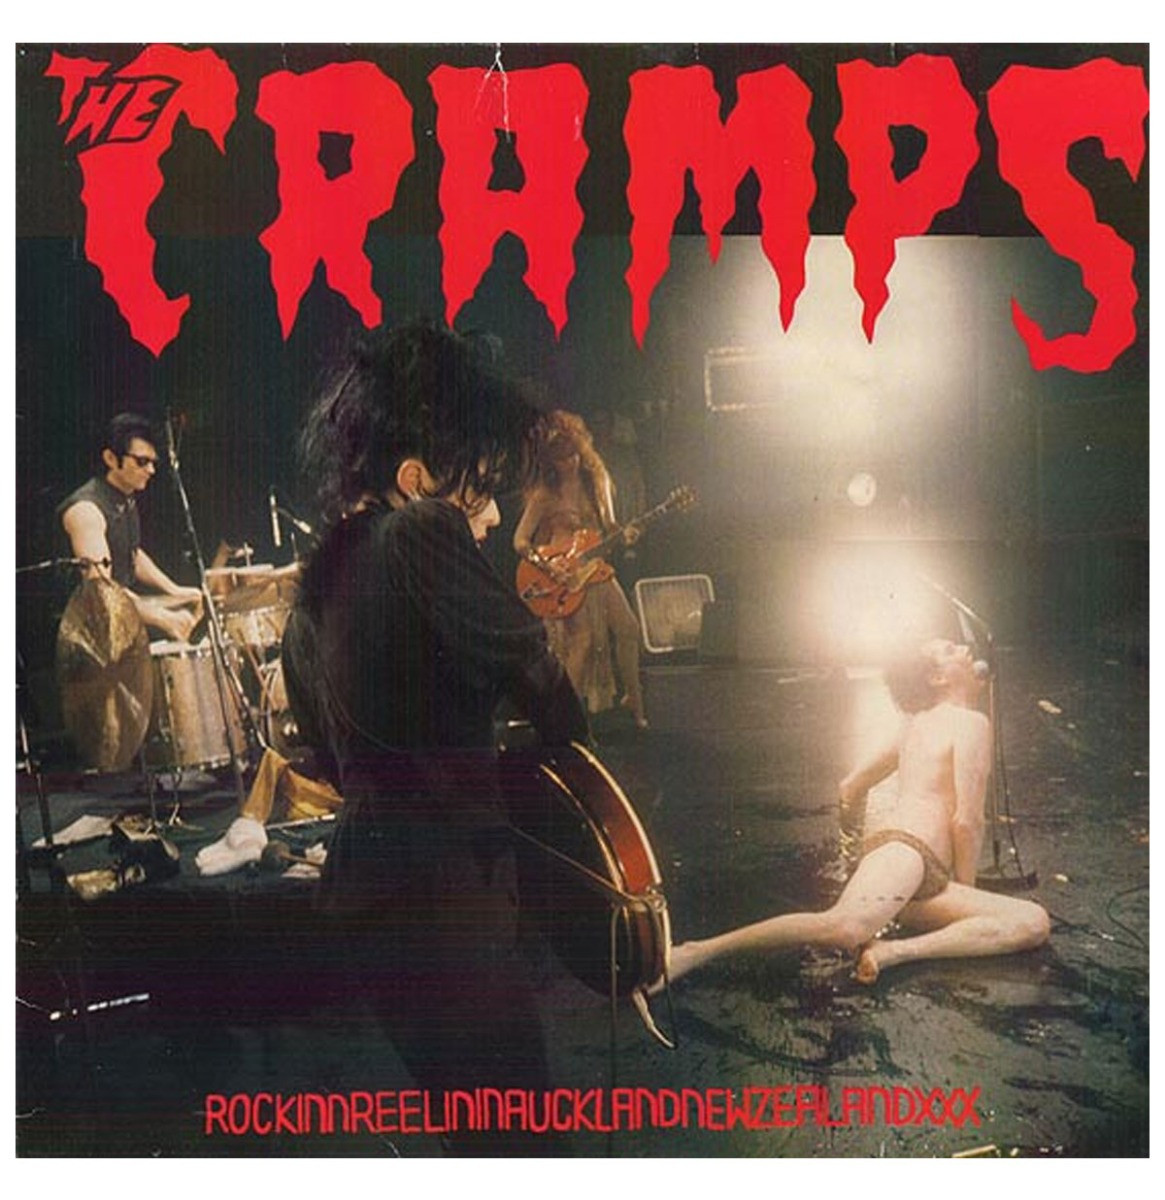 The Cramps - RockinnReelinInAucklandNewZealandXXX LP